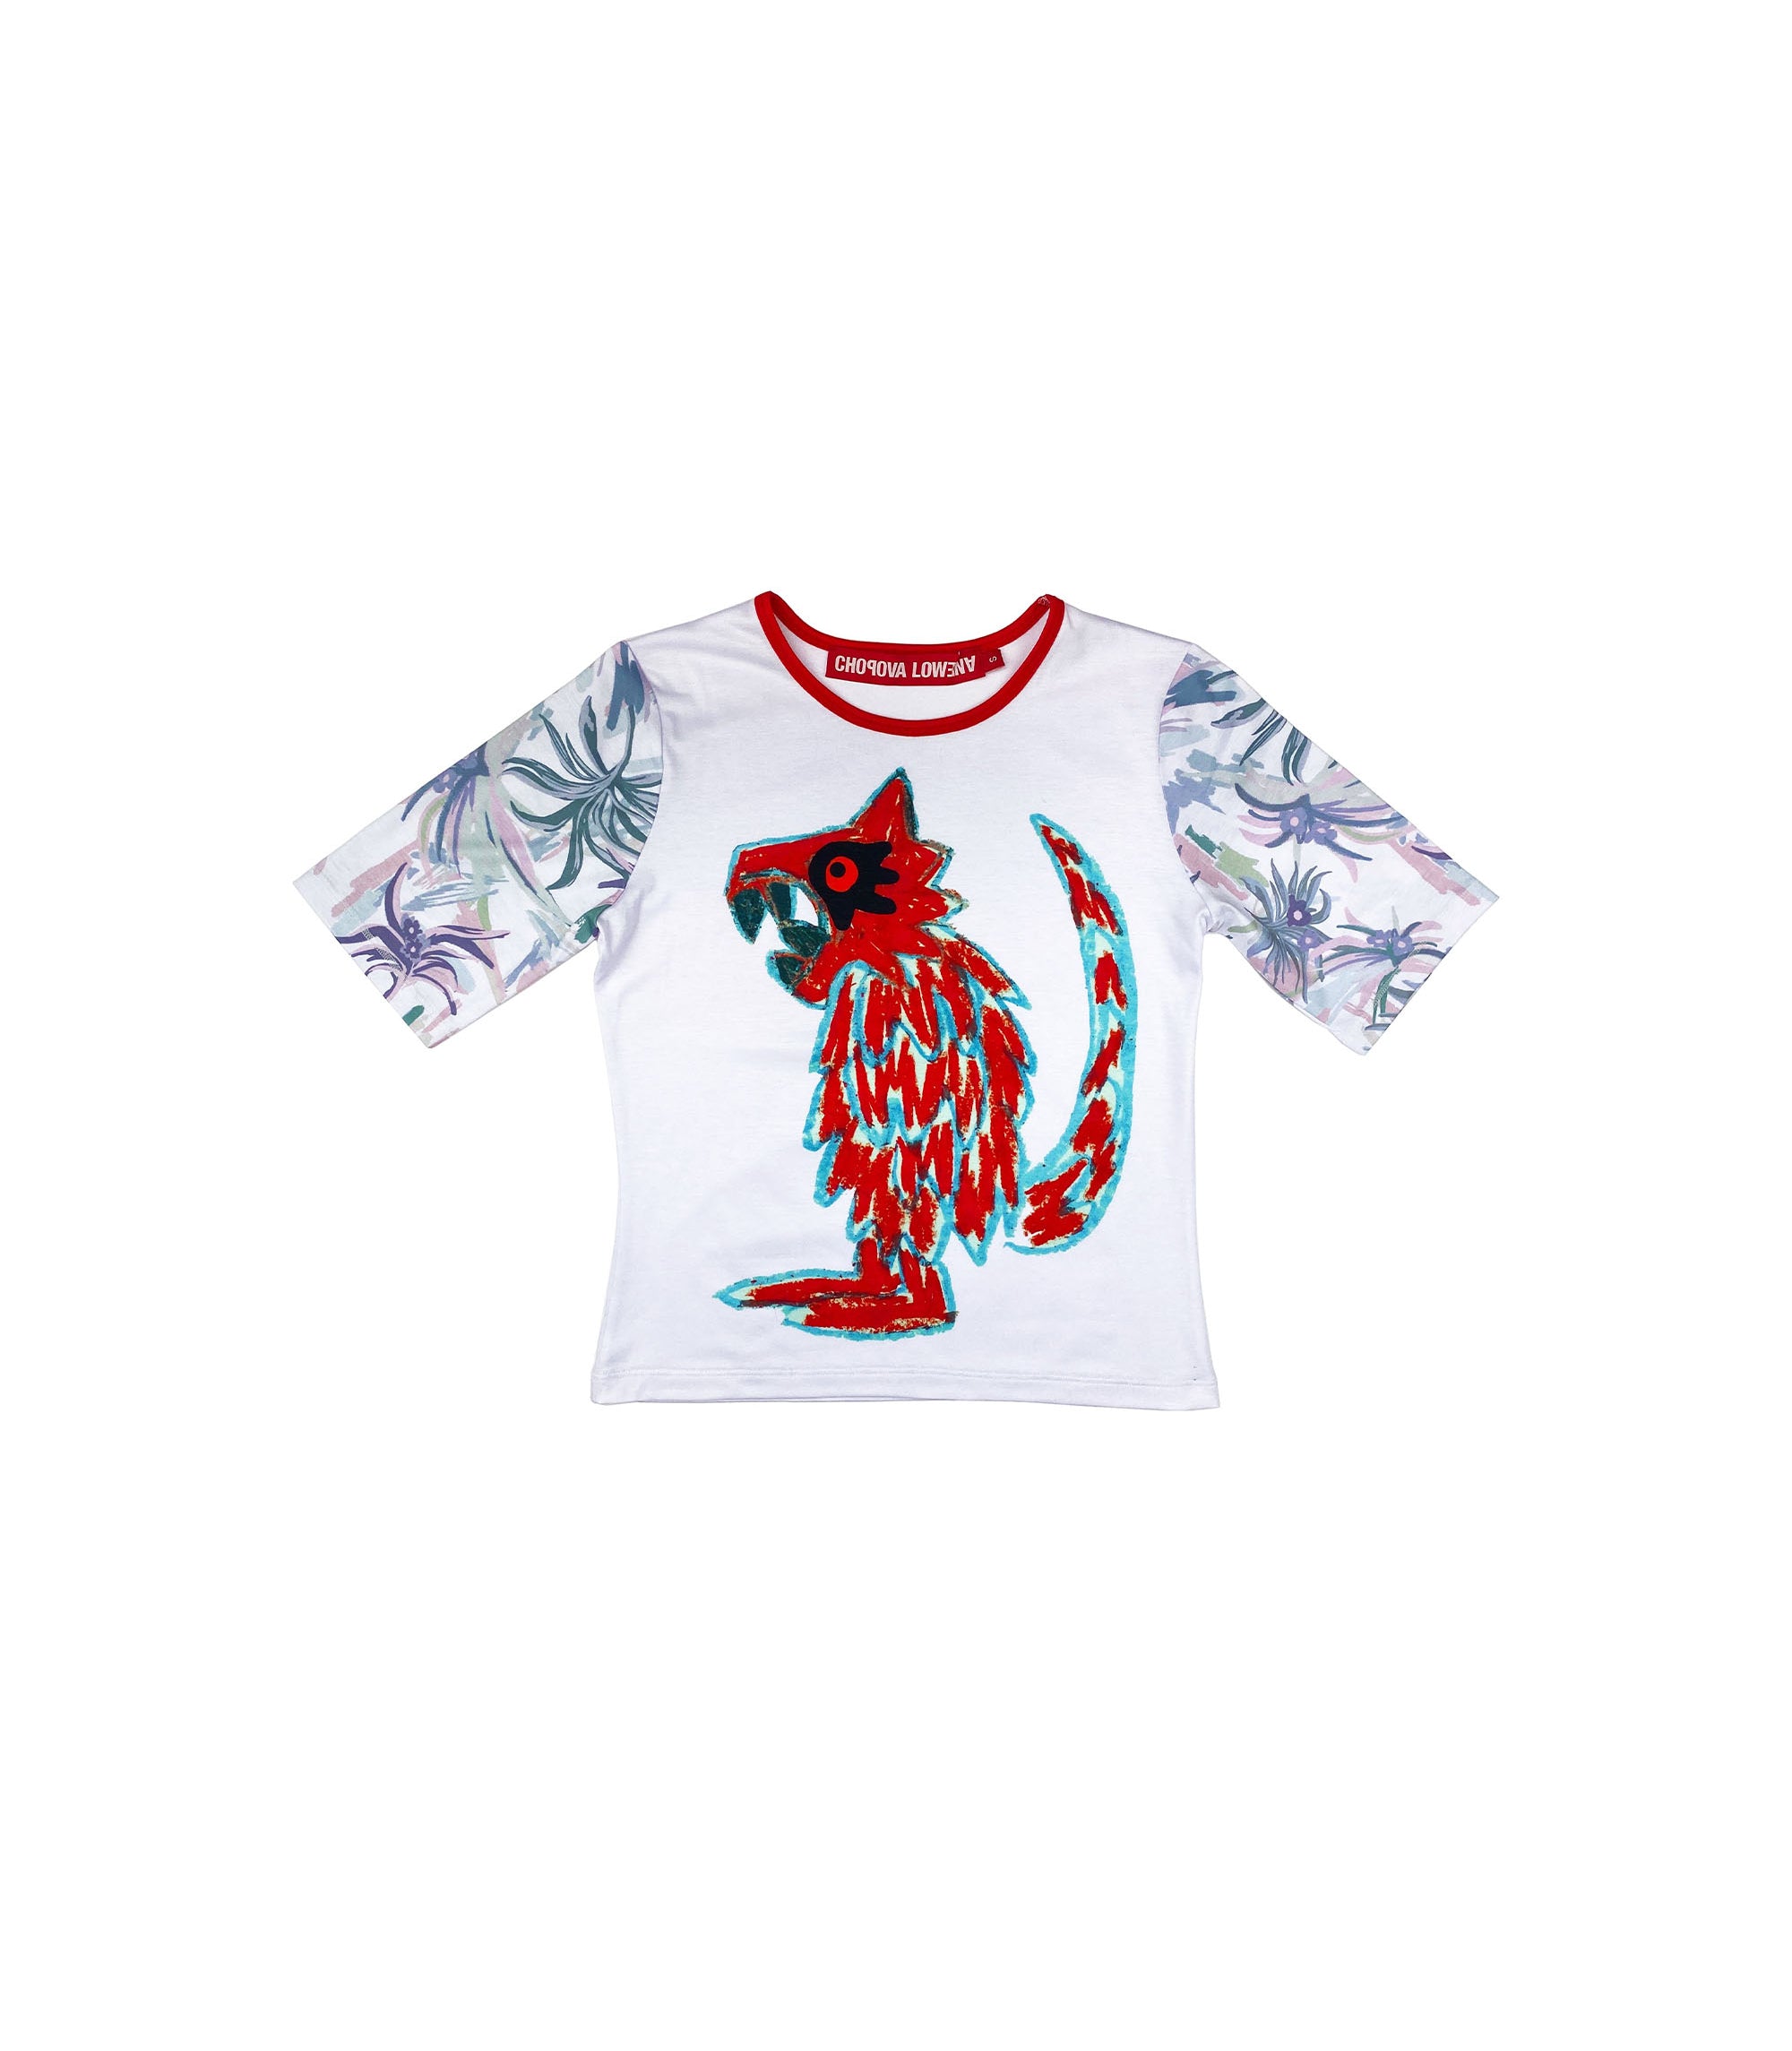 Grumpy Dragon Short Sleeve Jersey - White / Red